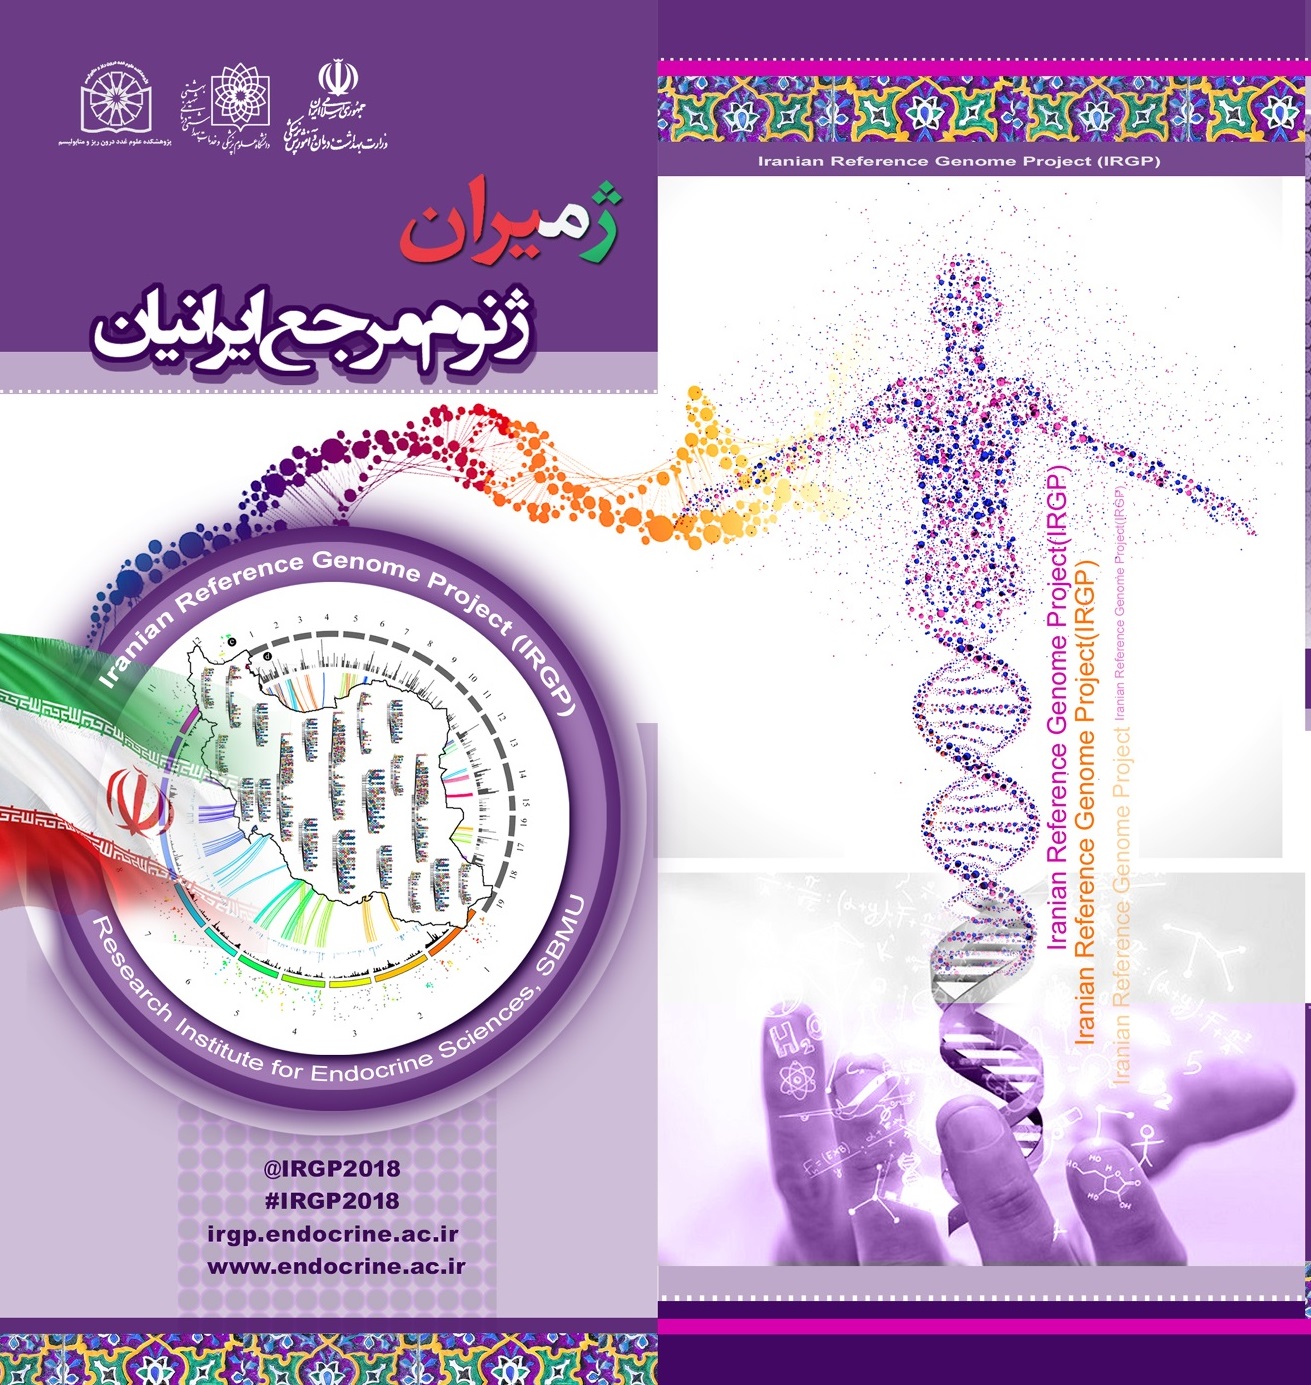 Iranian Reference Genome